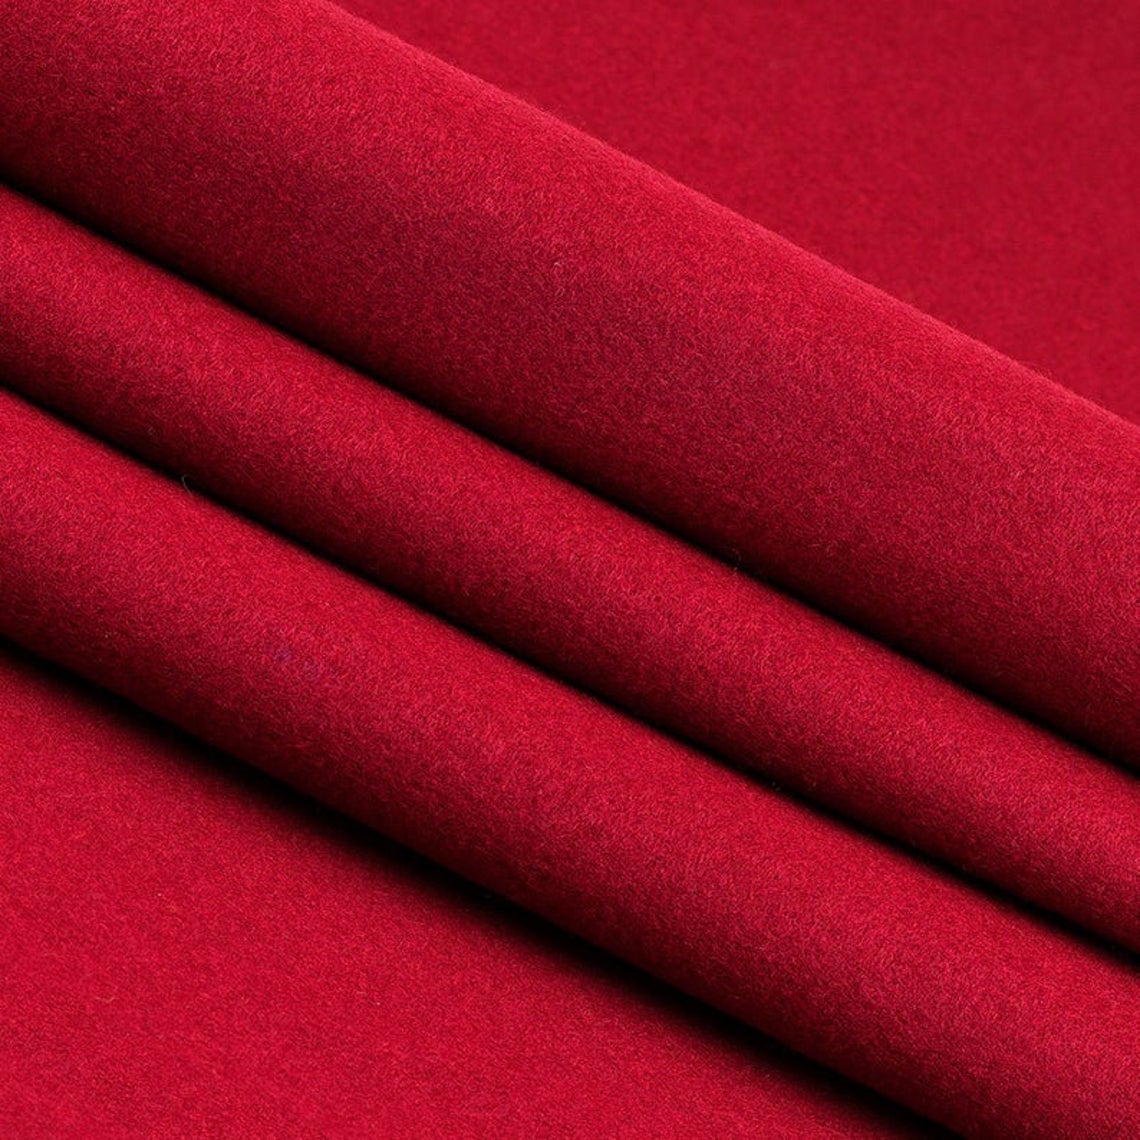 Acrylic Felt Fabric By The Roll | 20 yards | Wholesale Fabric ICE FABRICS Red